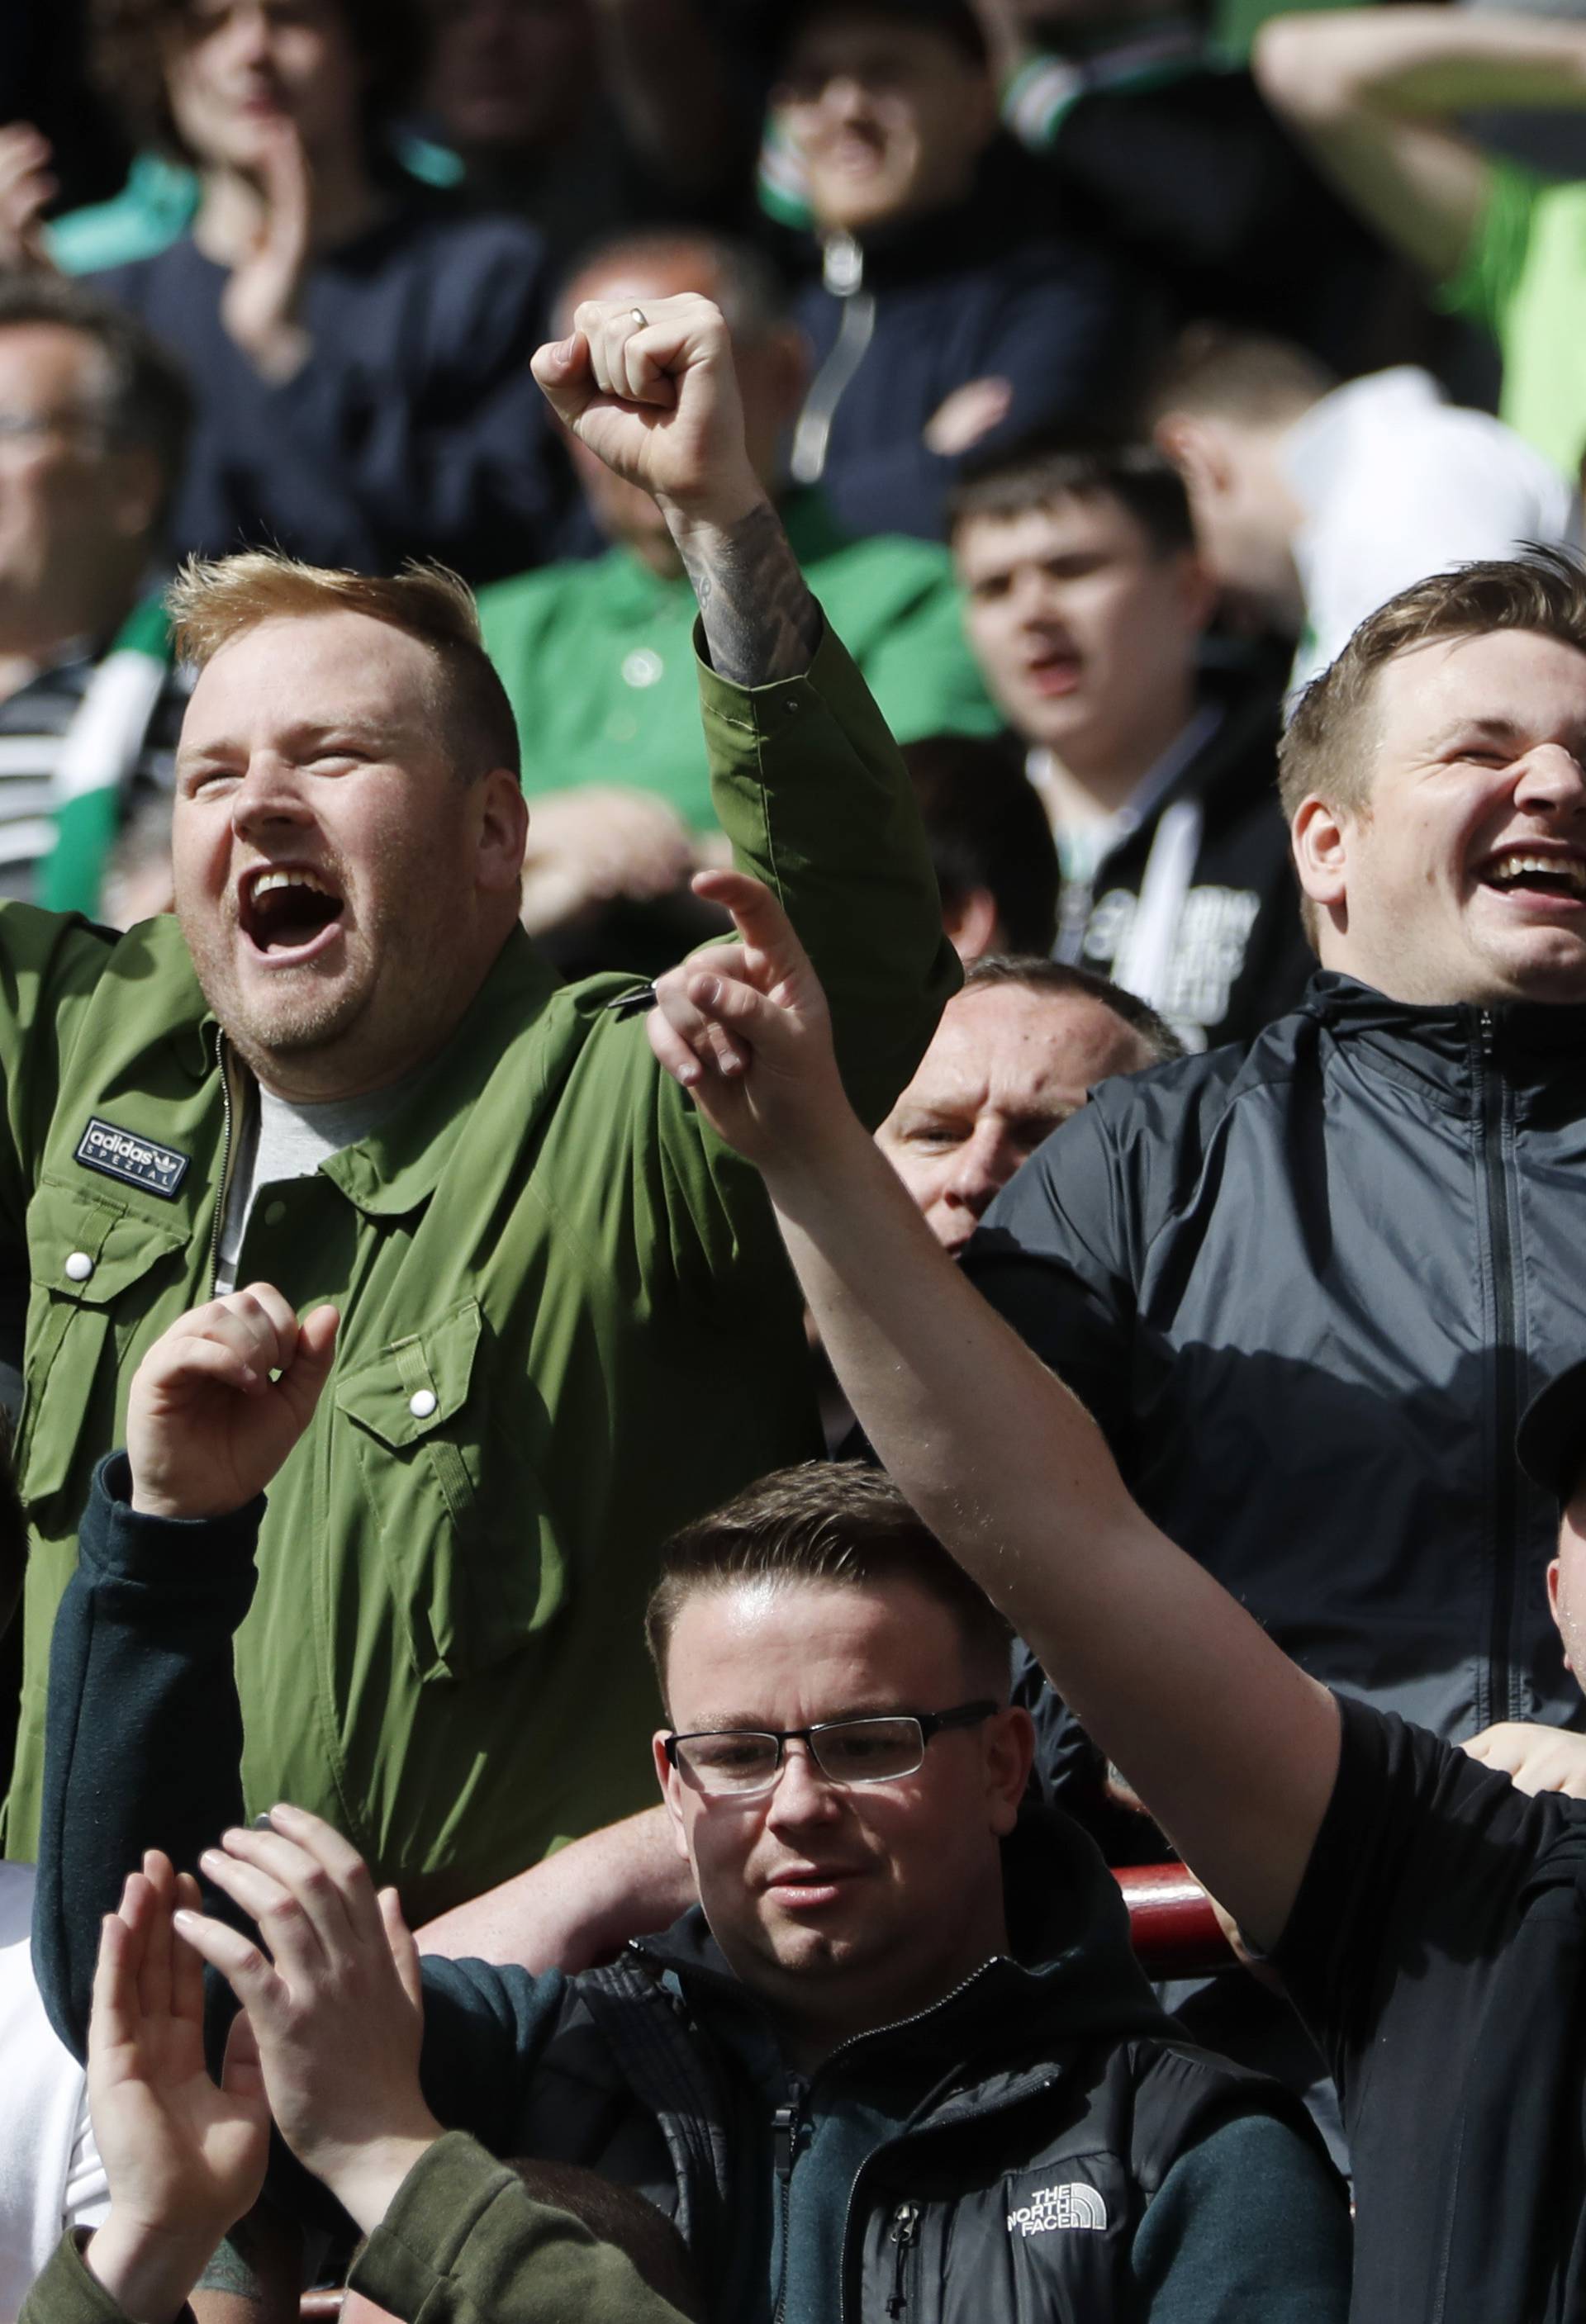 Celtic fans celebrate